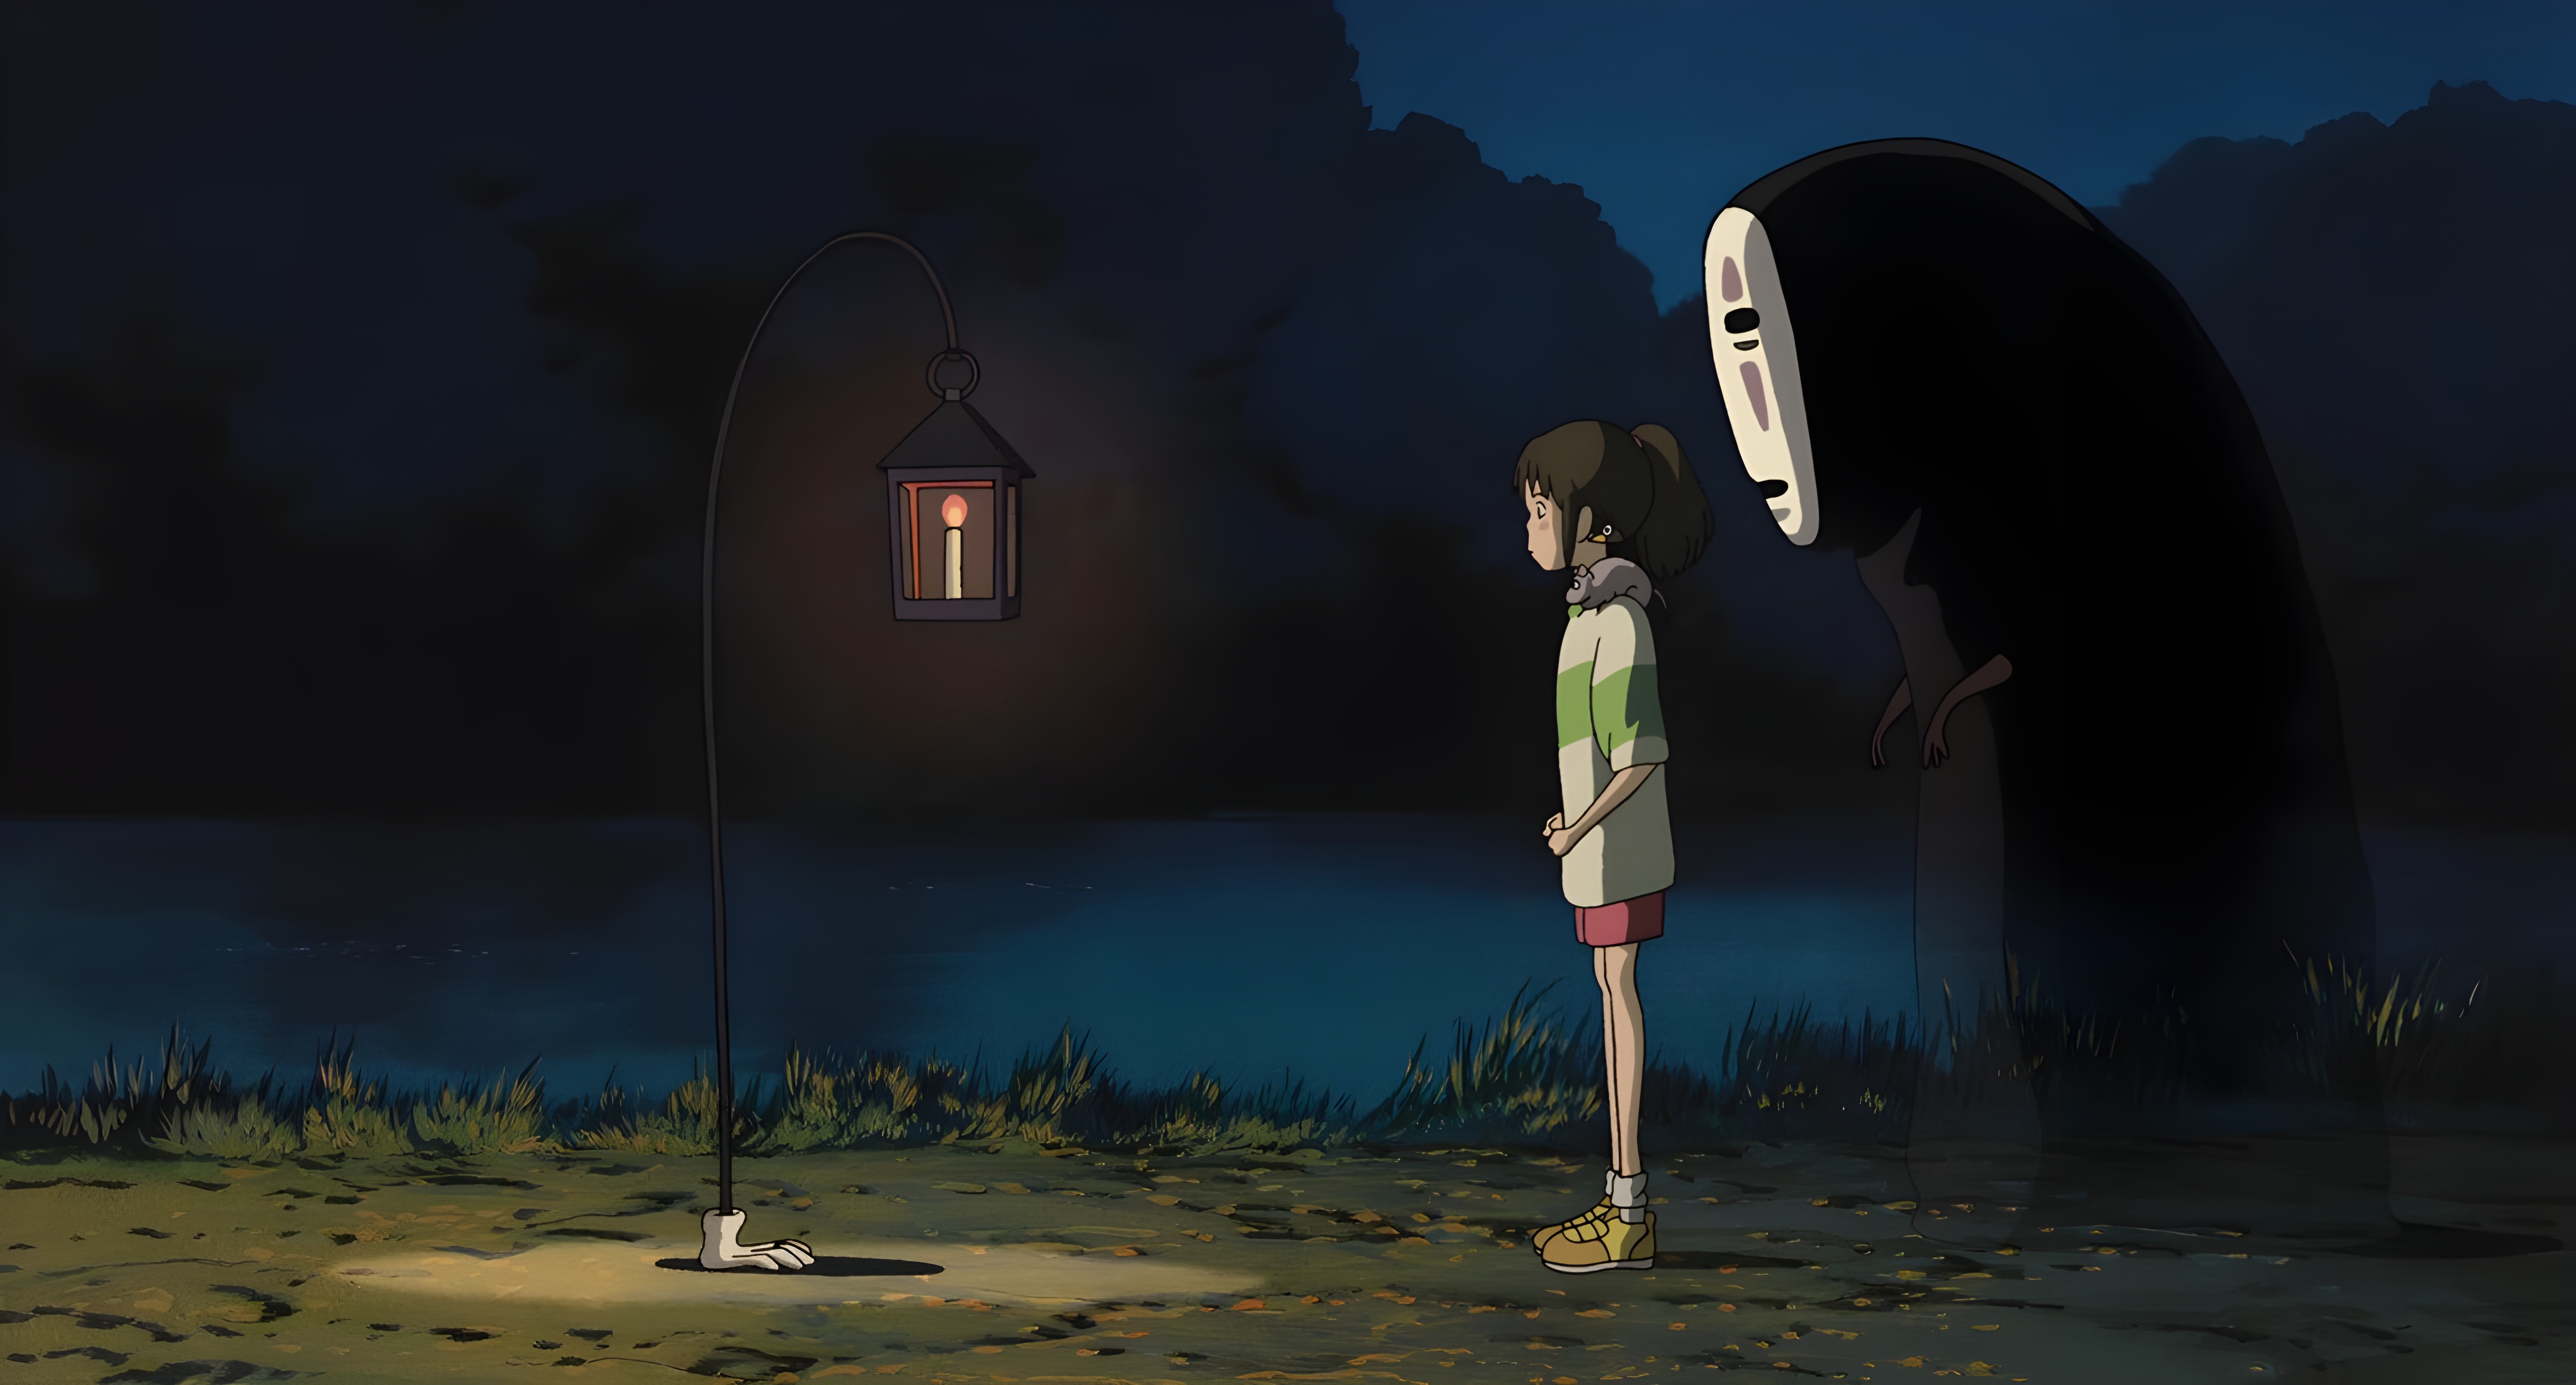 Spirited Away by Hayao Miyazaki